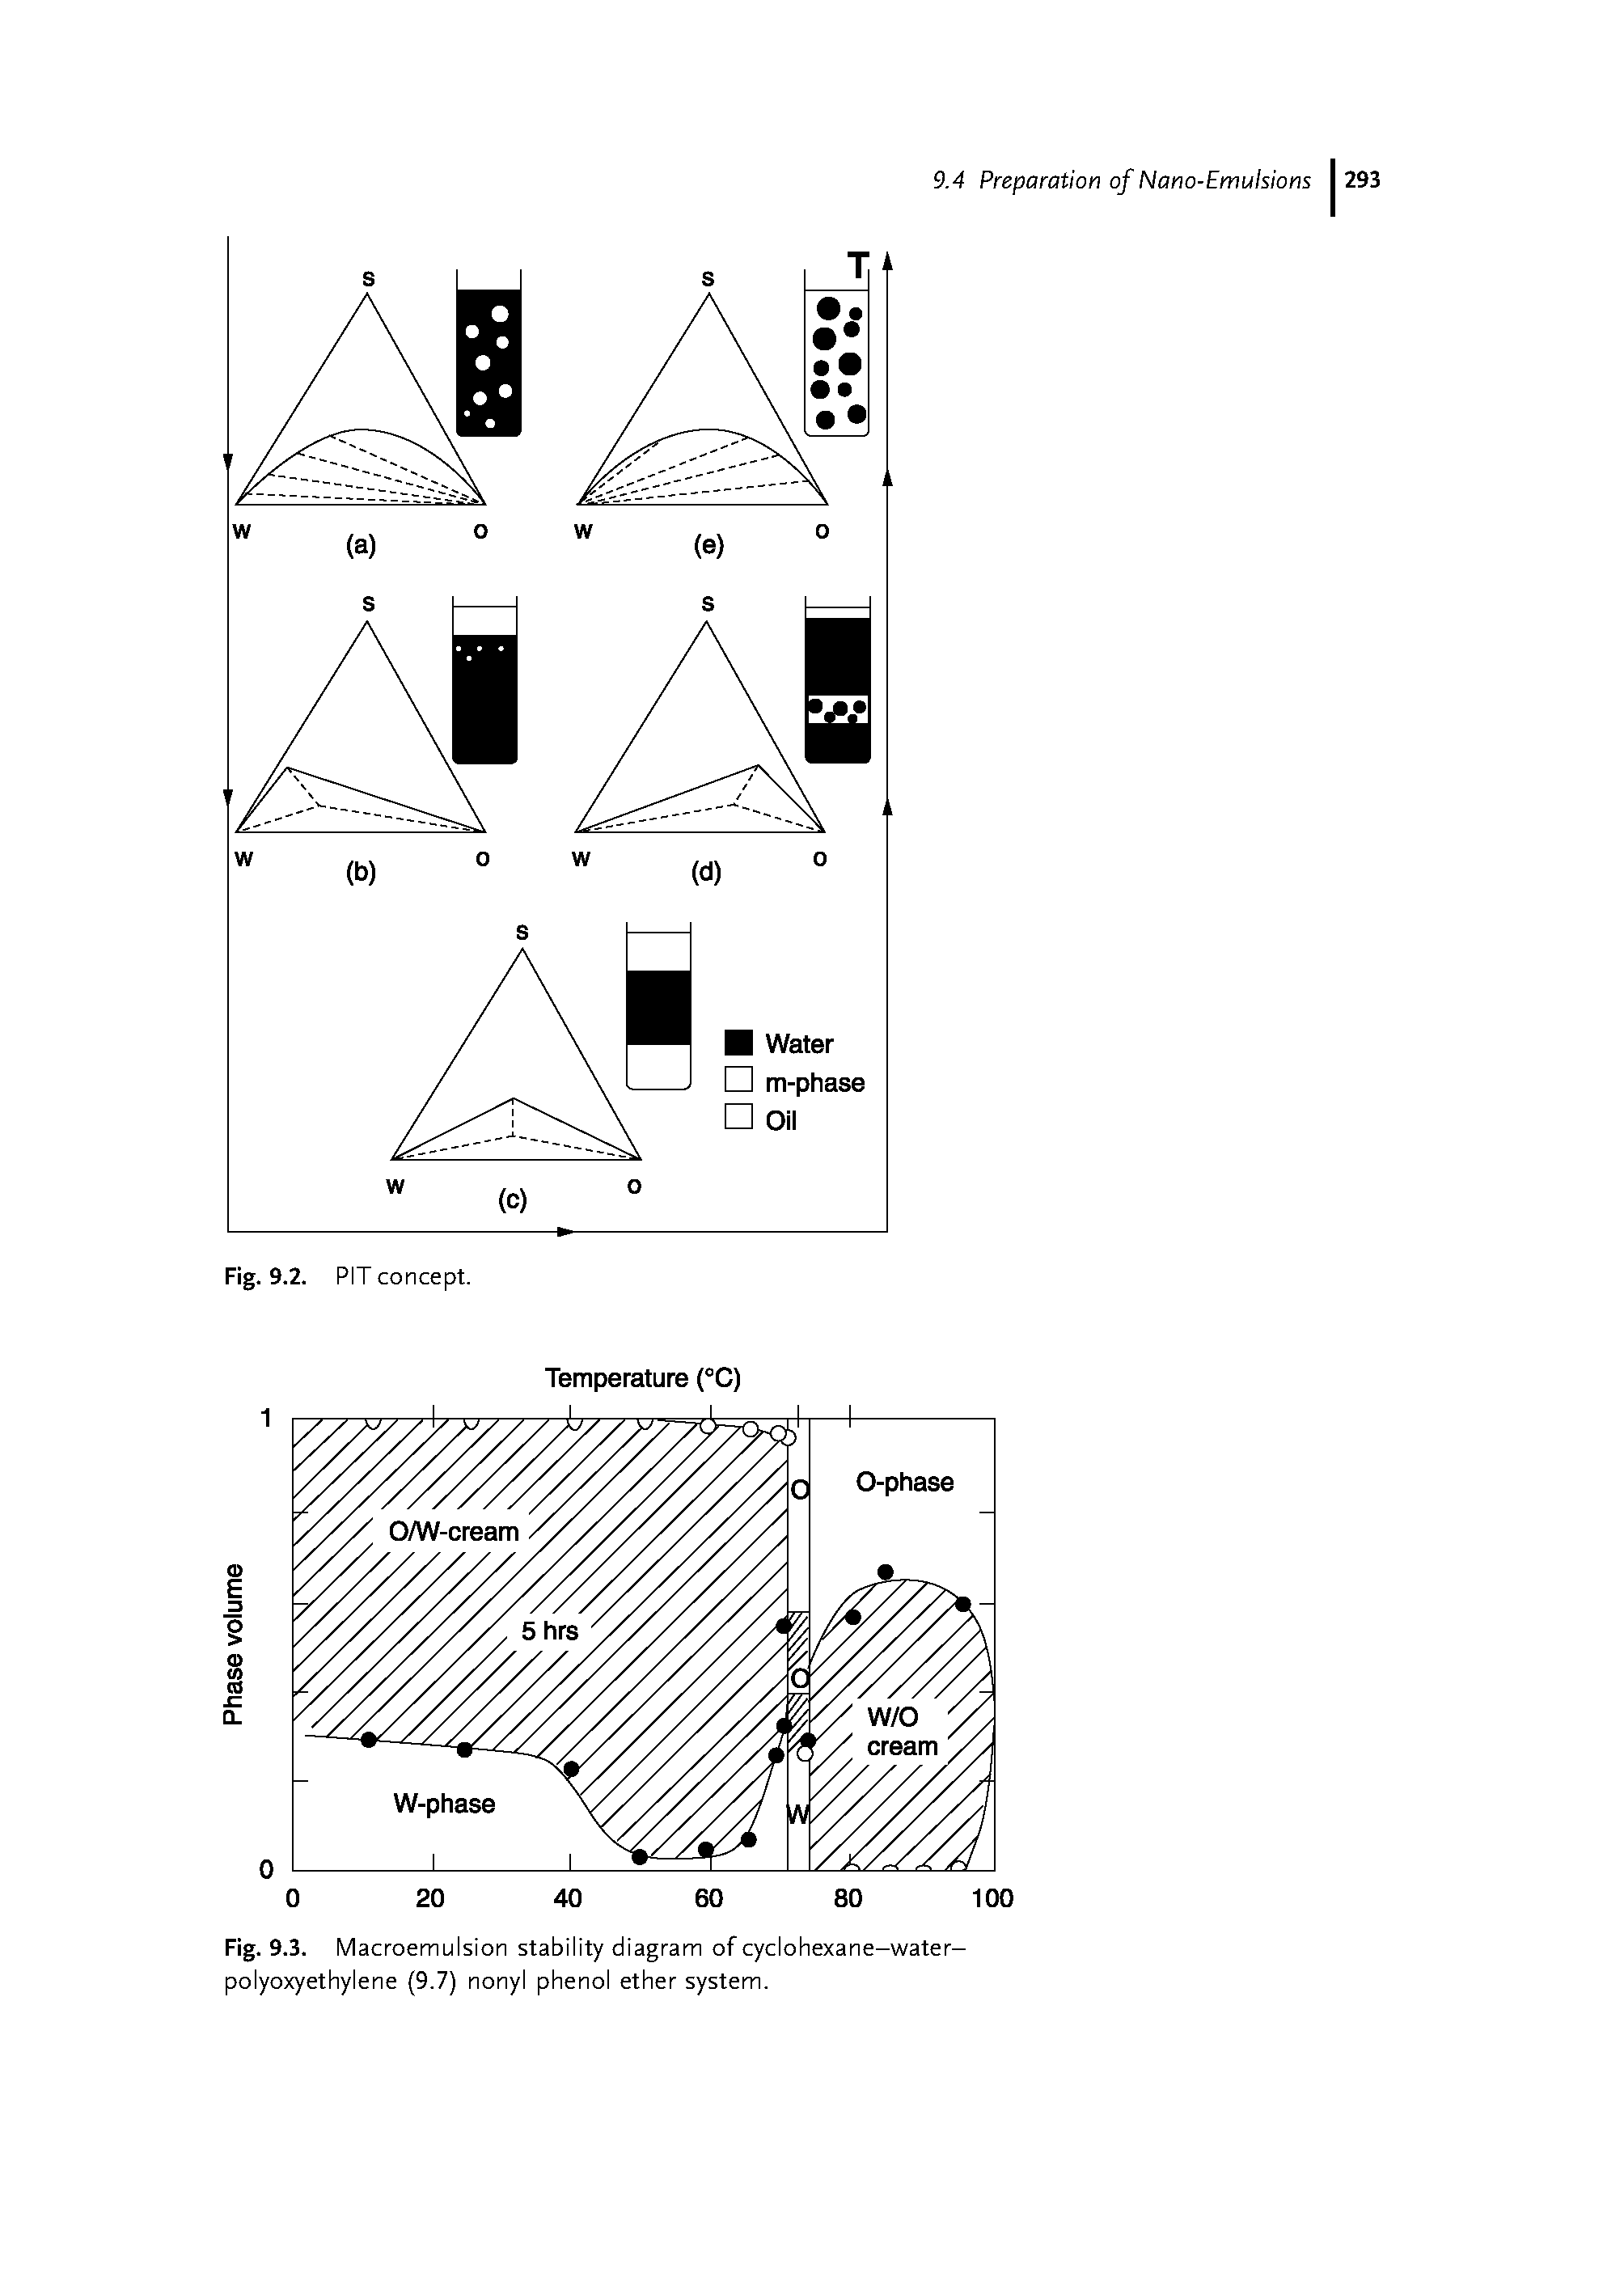 Fig. 9.3. Macroemulsion stability diagram of cyclohexane-water-polyoxyethylene (9.7) nonyl phenol ether system.